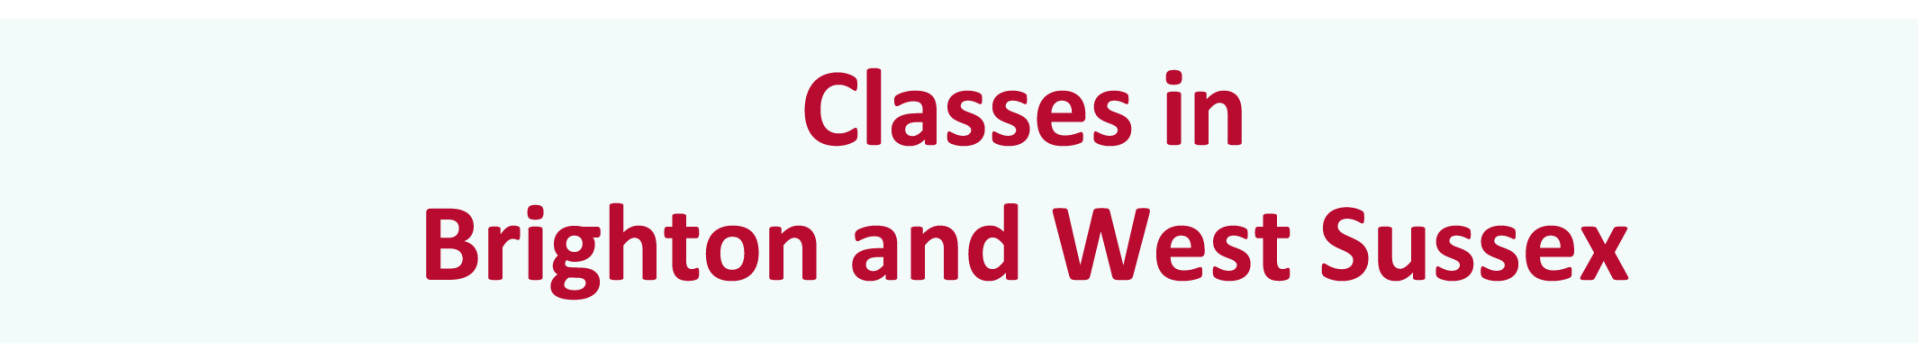 Classes in Brighton and West Sussex